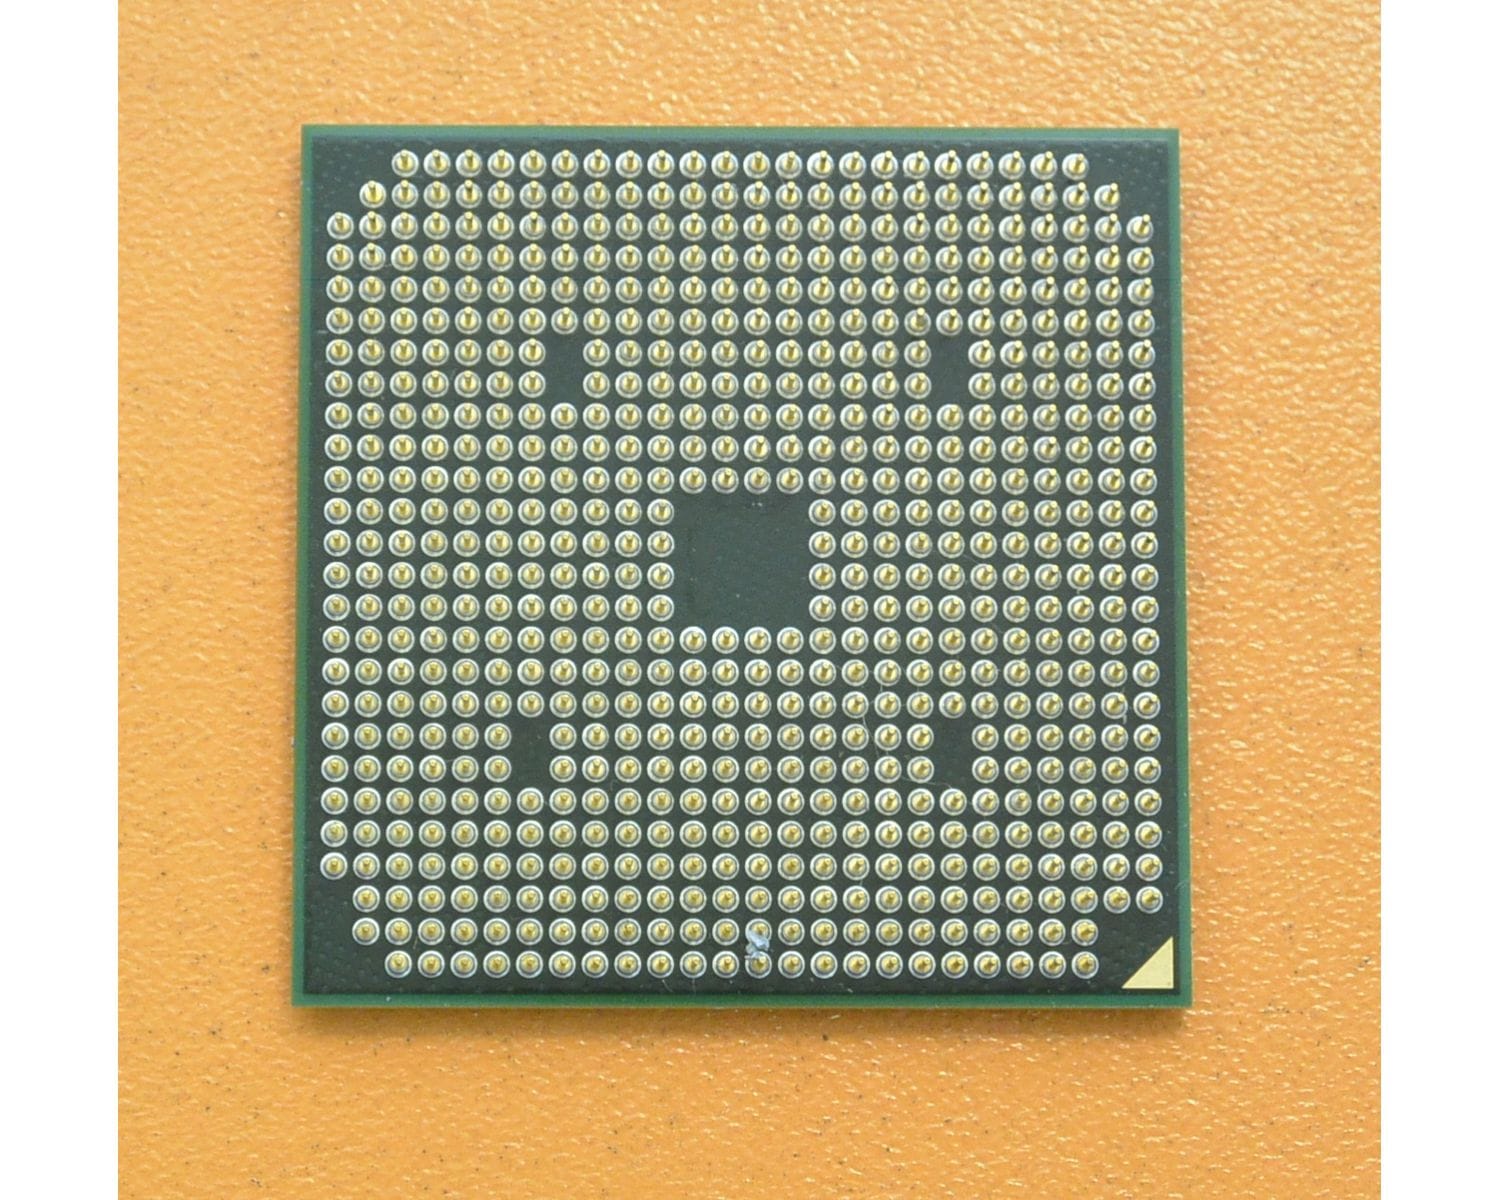 Сокет s1. Процессор AMD a6-3400m. AMD Turion 64 x2 TL-60. AMD Turion 64 x2 Socket. A6-3400m.